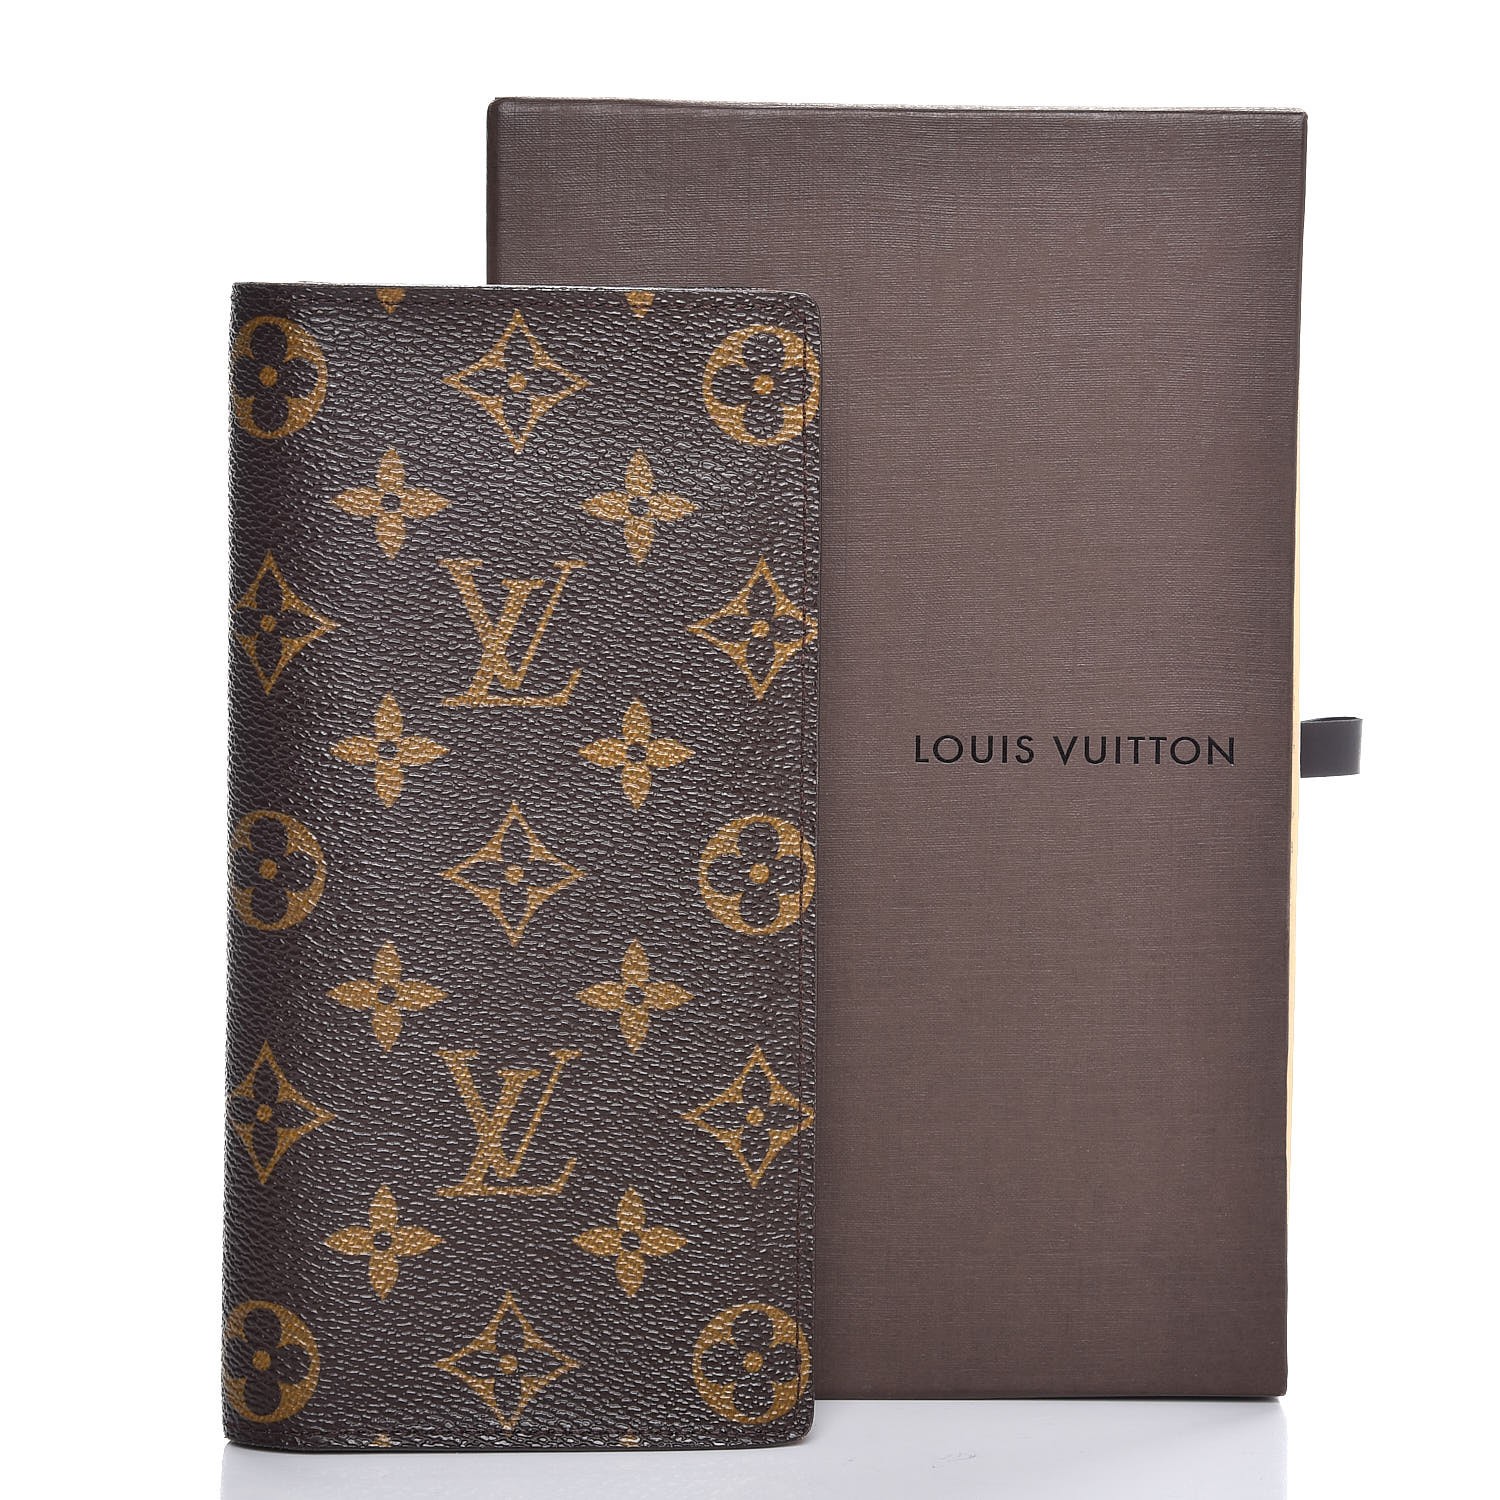 LOUIS VUITTON Monogram Brazza Wallet 296826